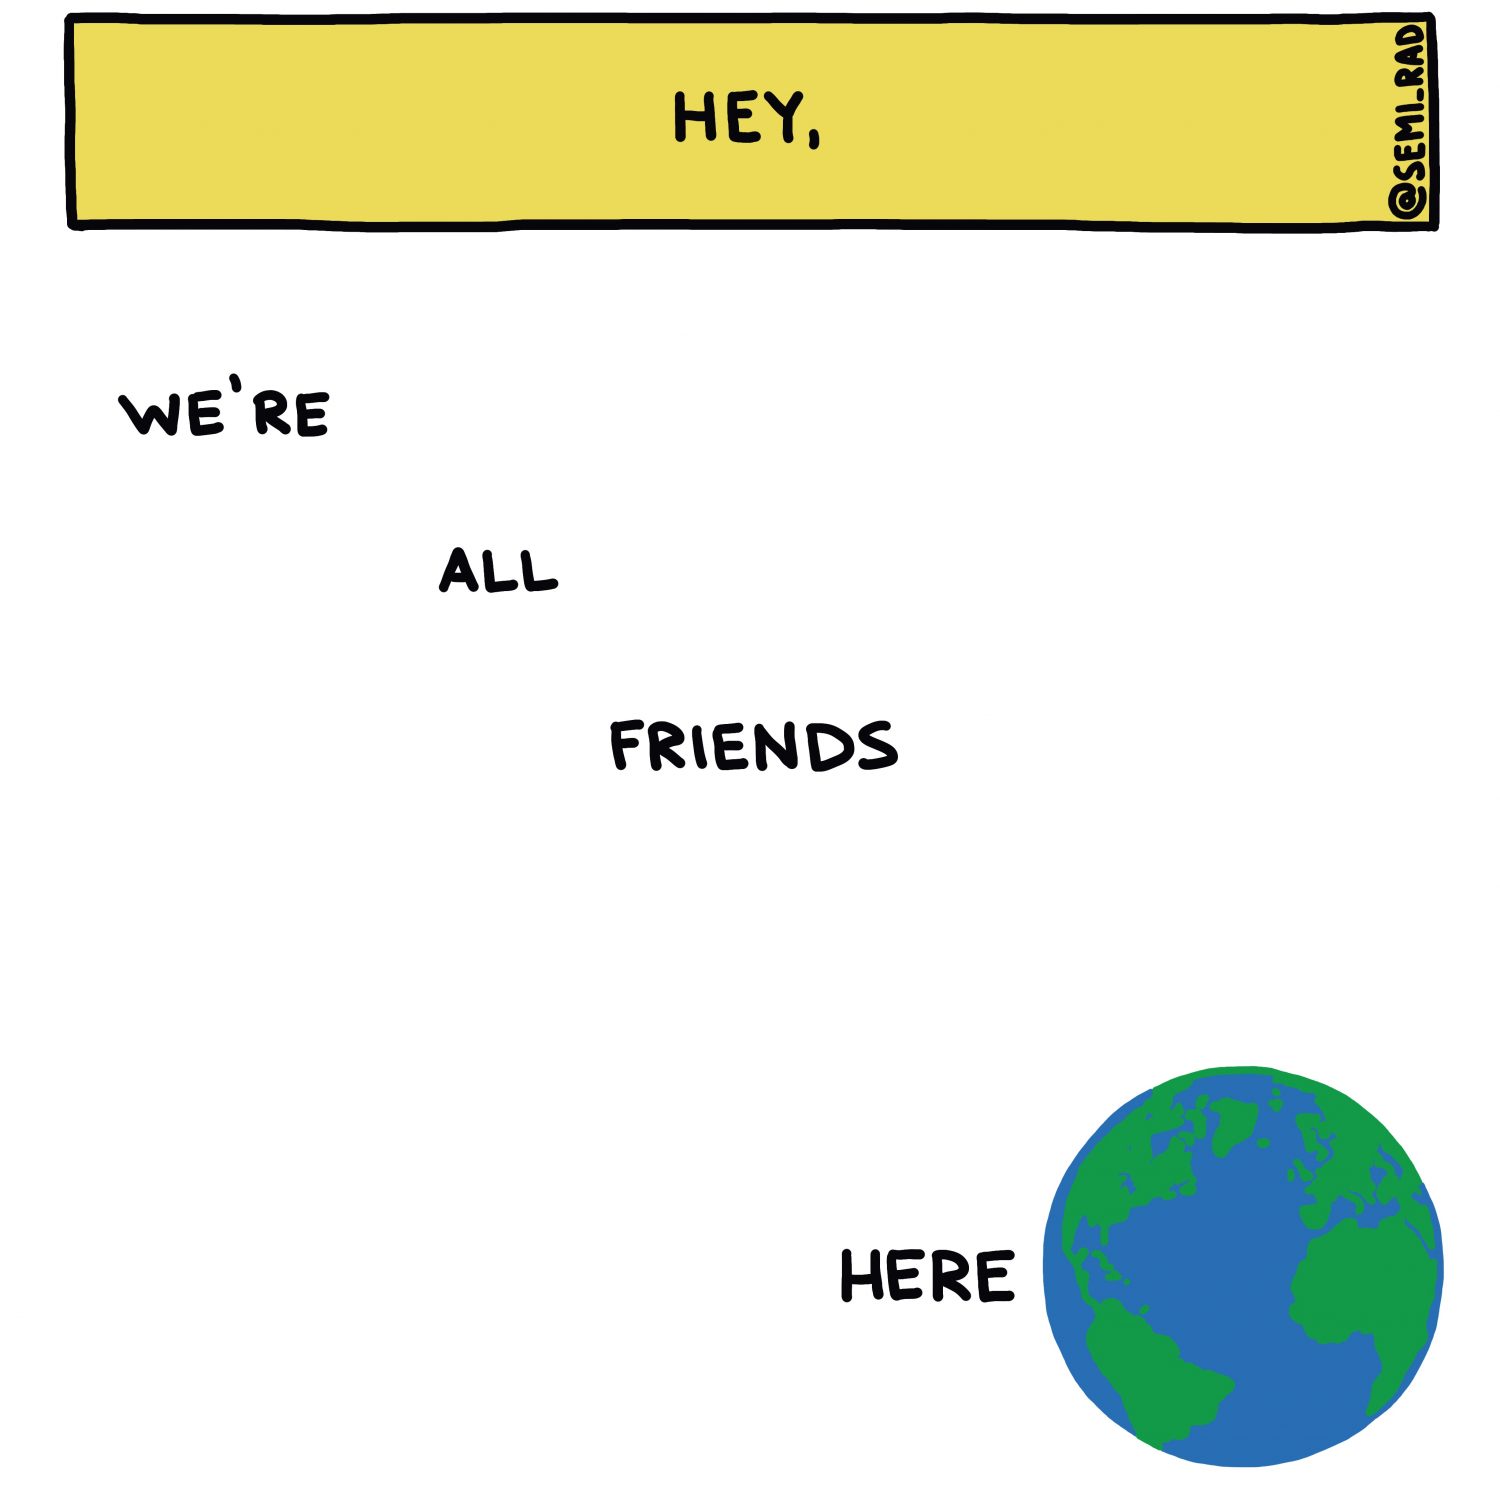 semi-rad illustration: hey, we're all friends here